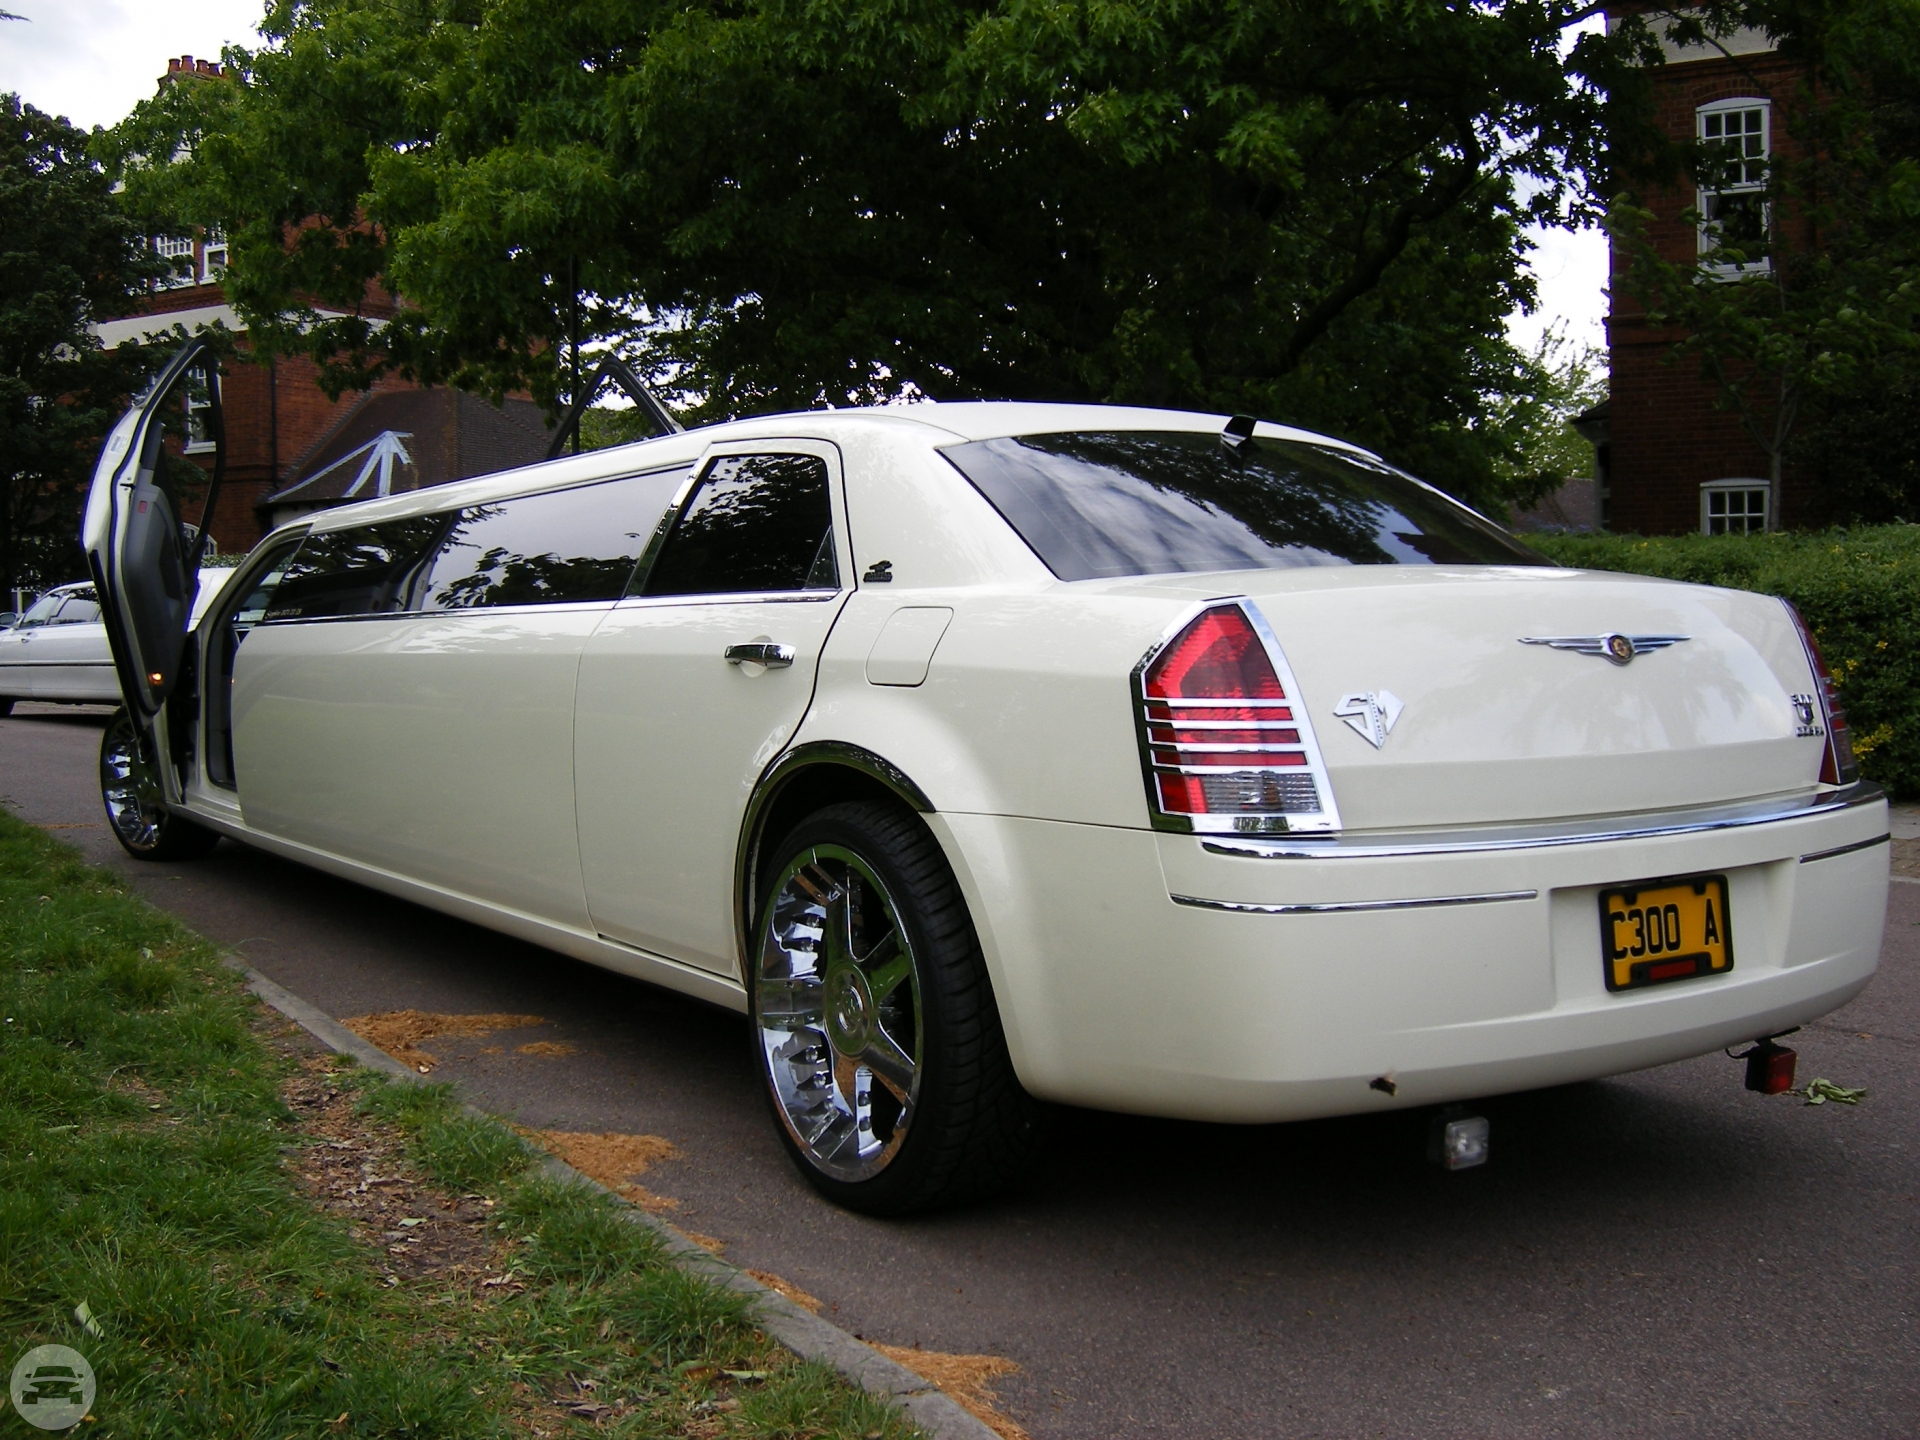 White Chrysler 300 Limousine
Limo /
Stansted CM24 8JT, UK

 / Hourly £0.00
